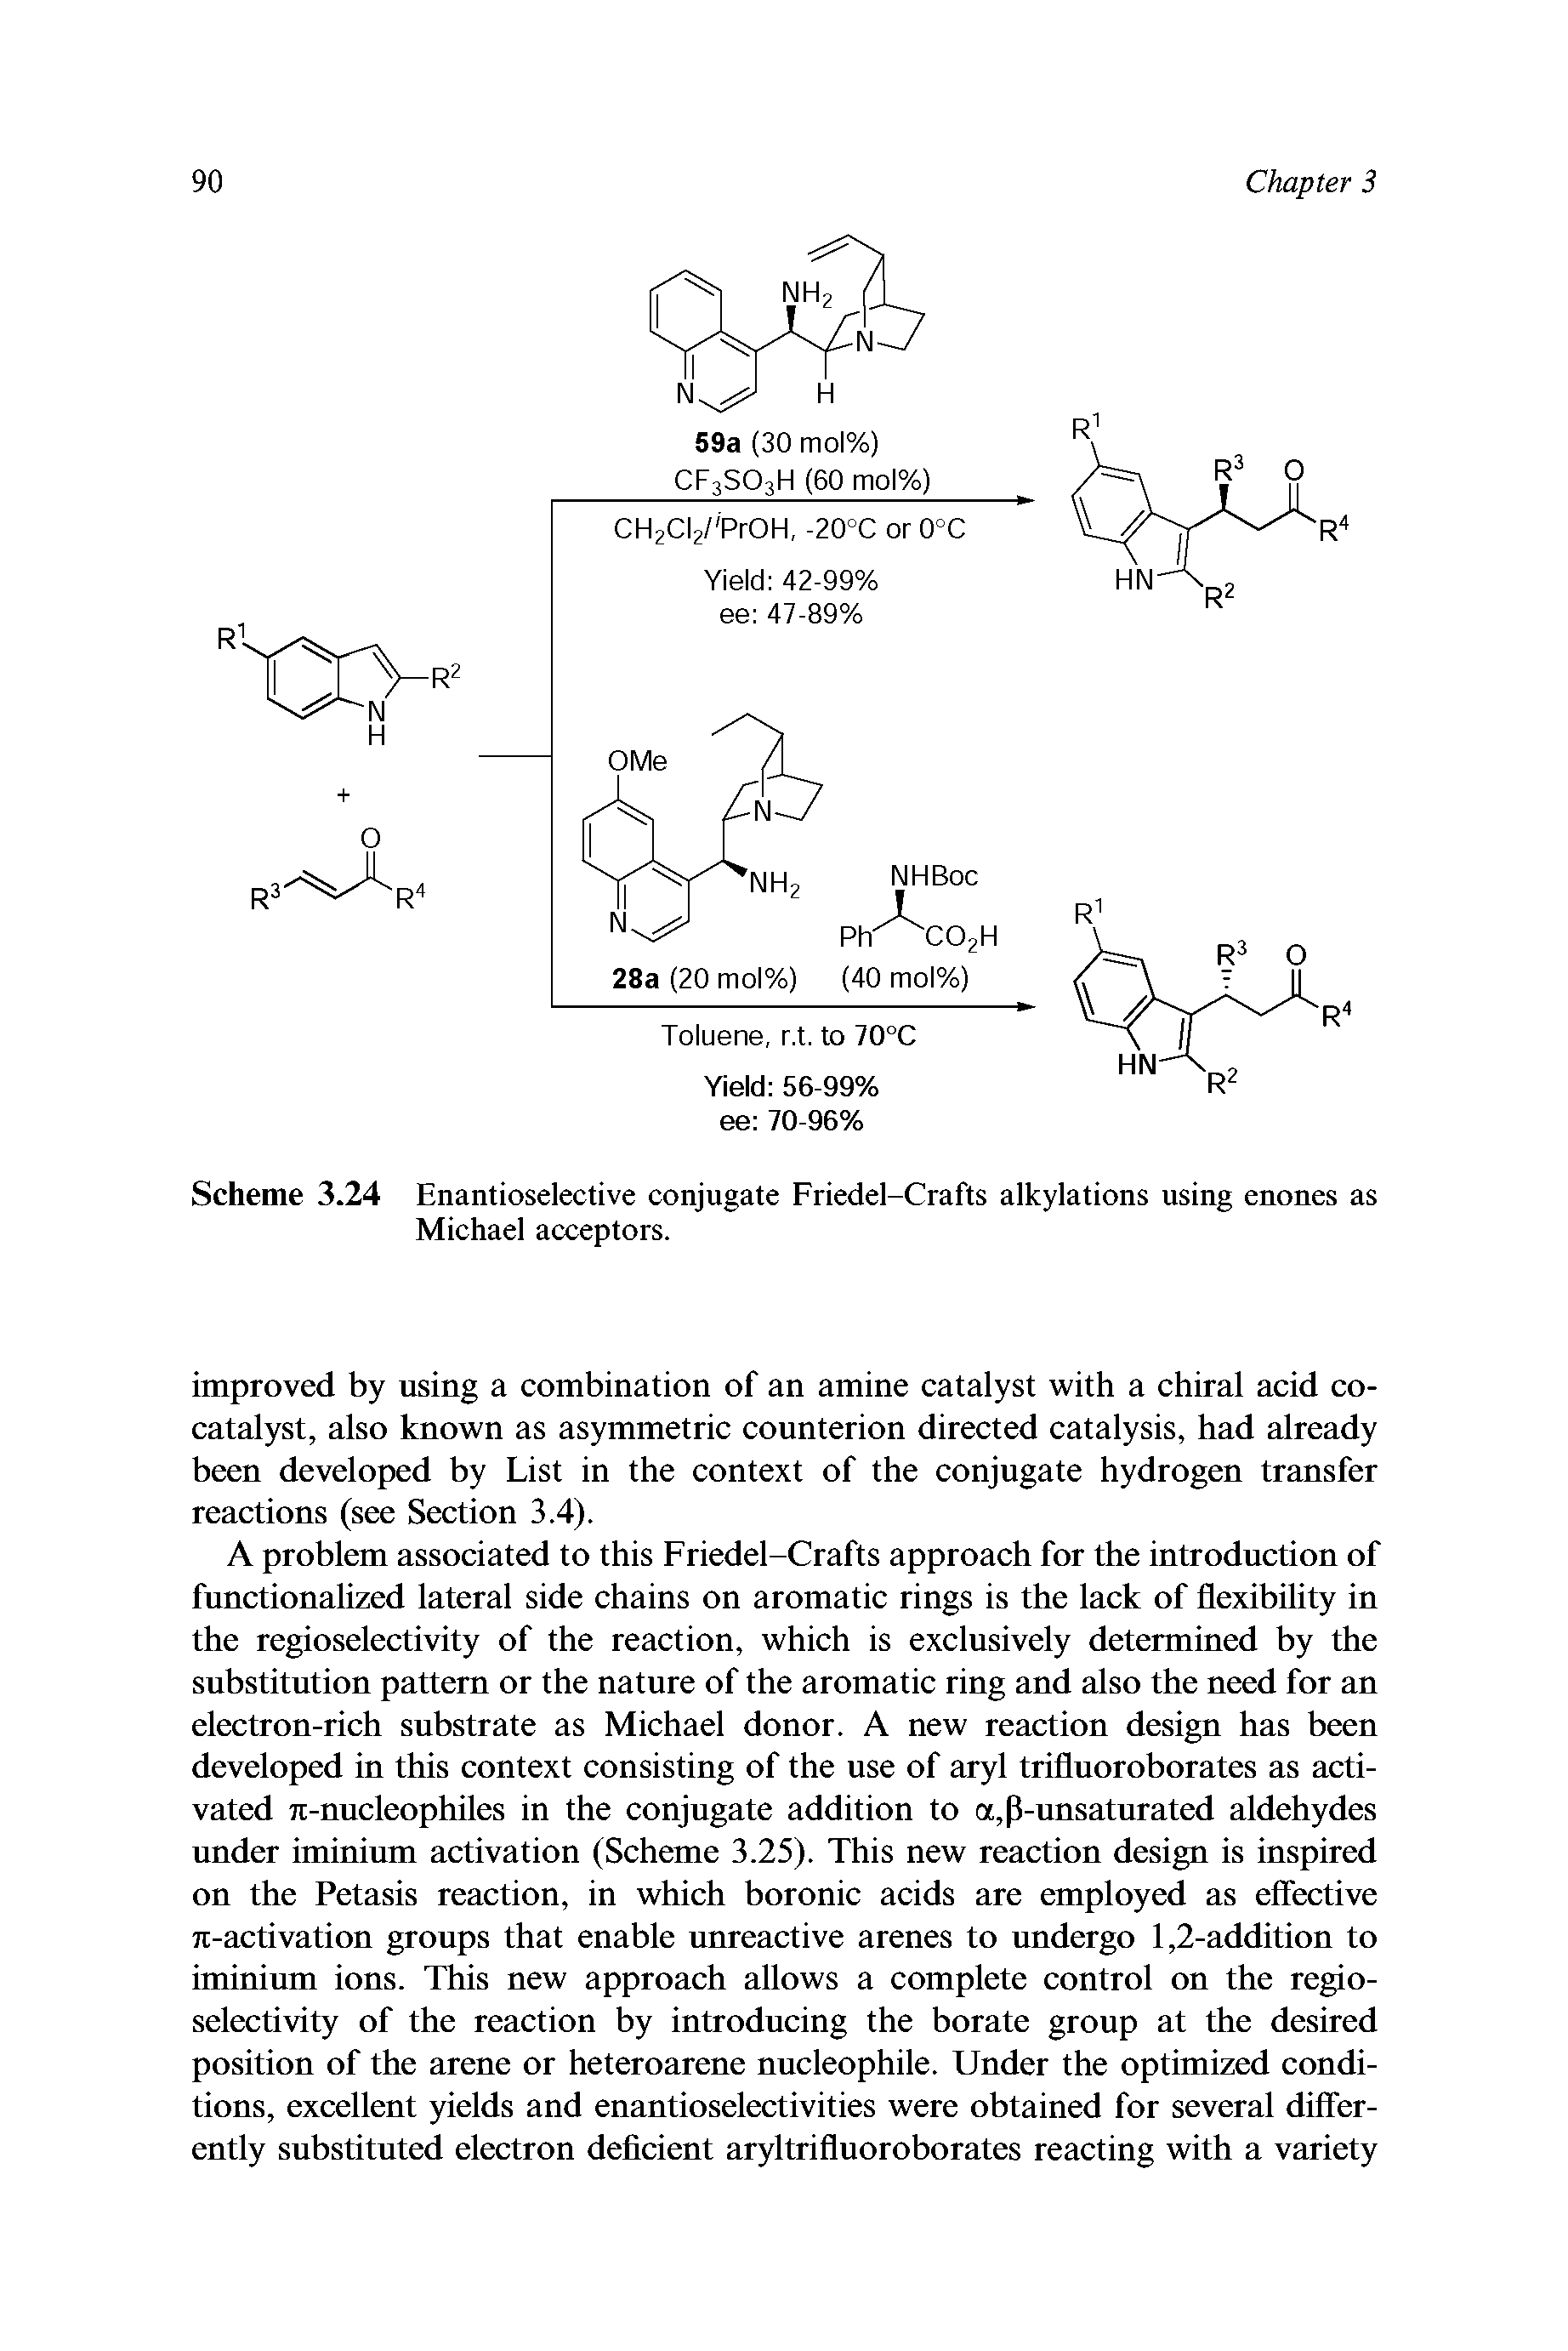 Scheme 3.24 Enantioselective conjugate Friedel-Crafts alkylations using enones as Michael acceptors.